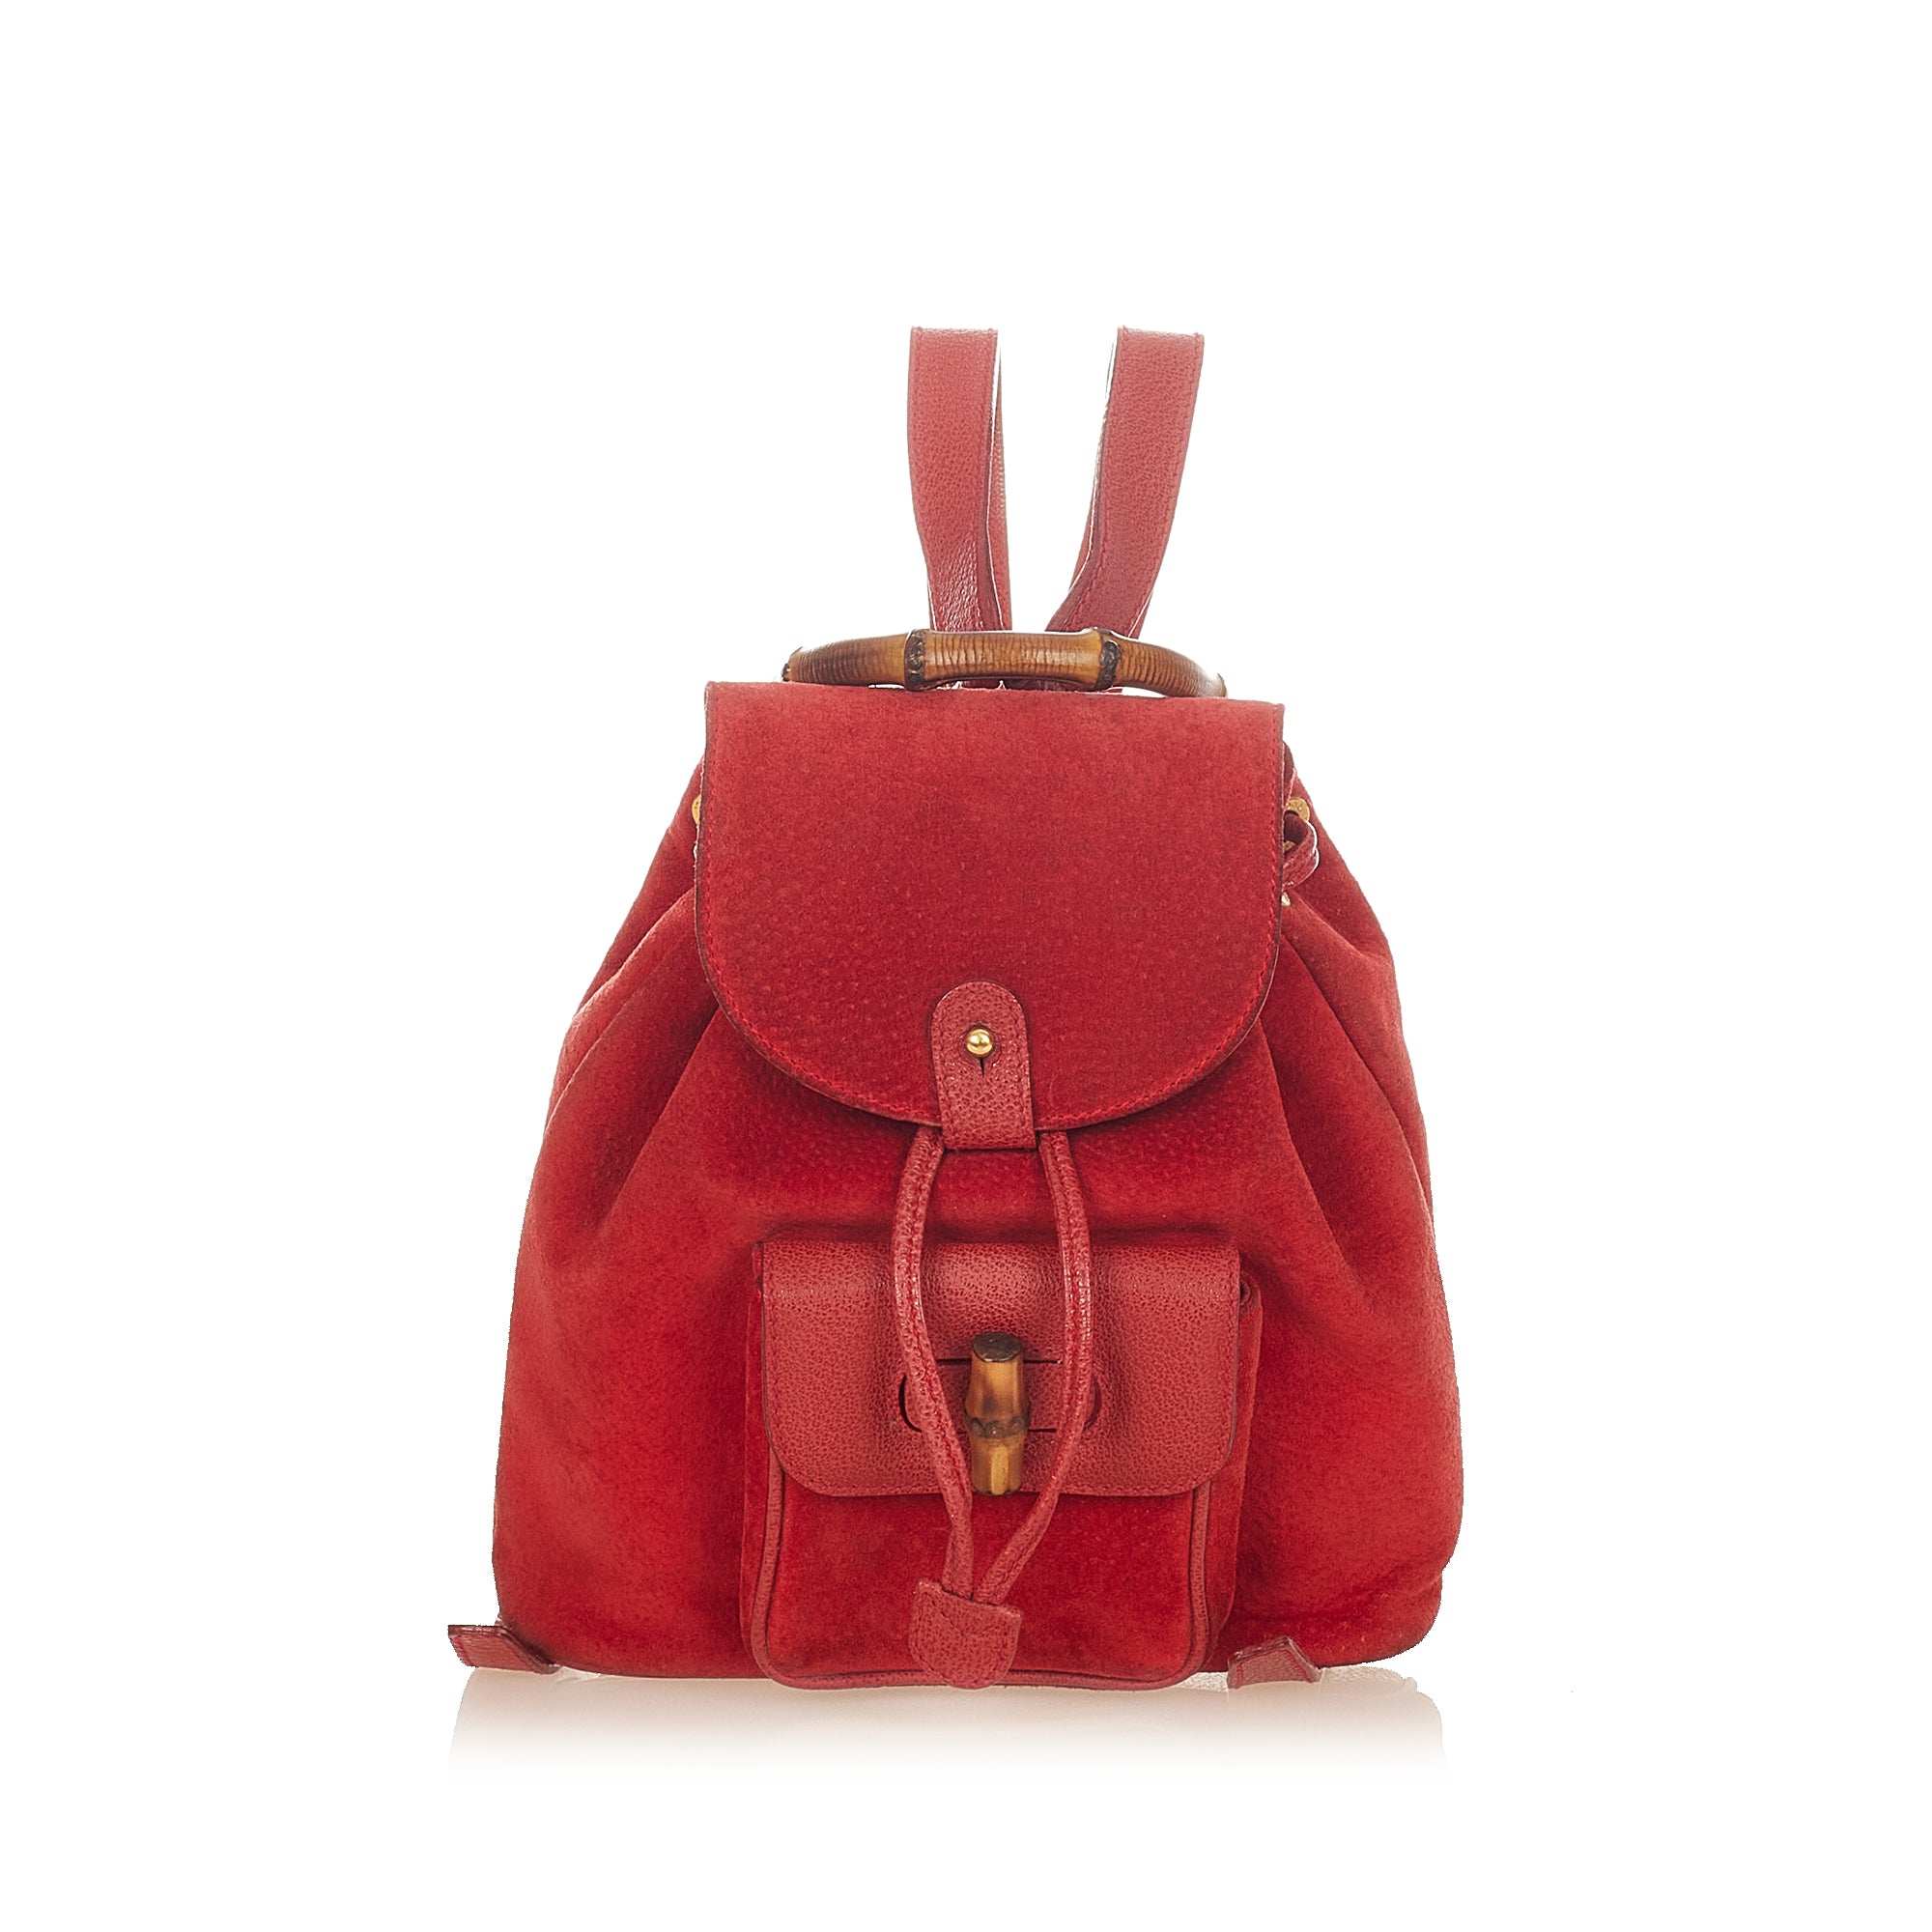 bag or a Gucci Bamboo Backpack